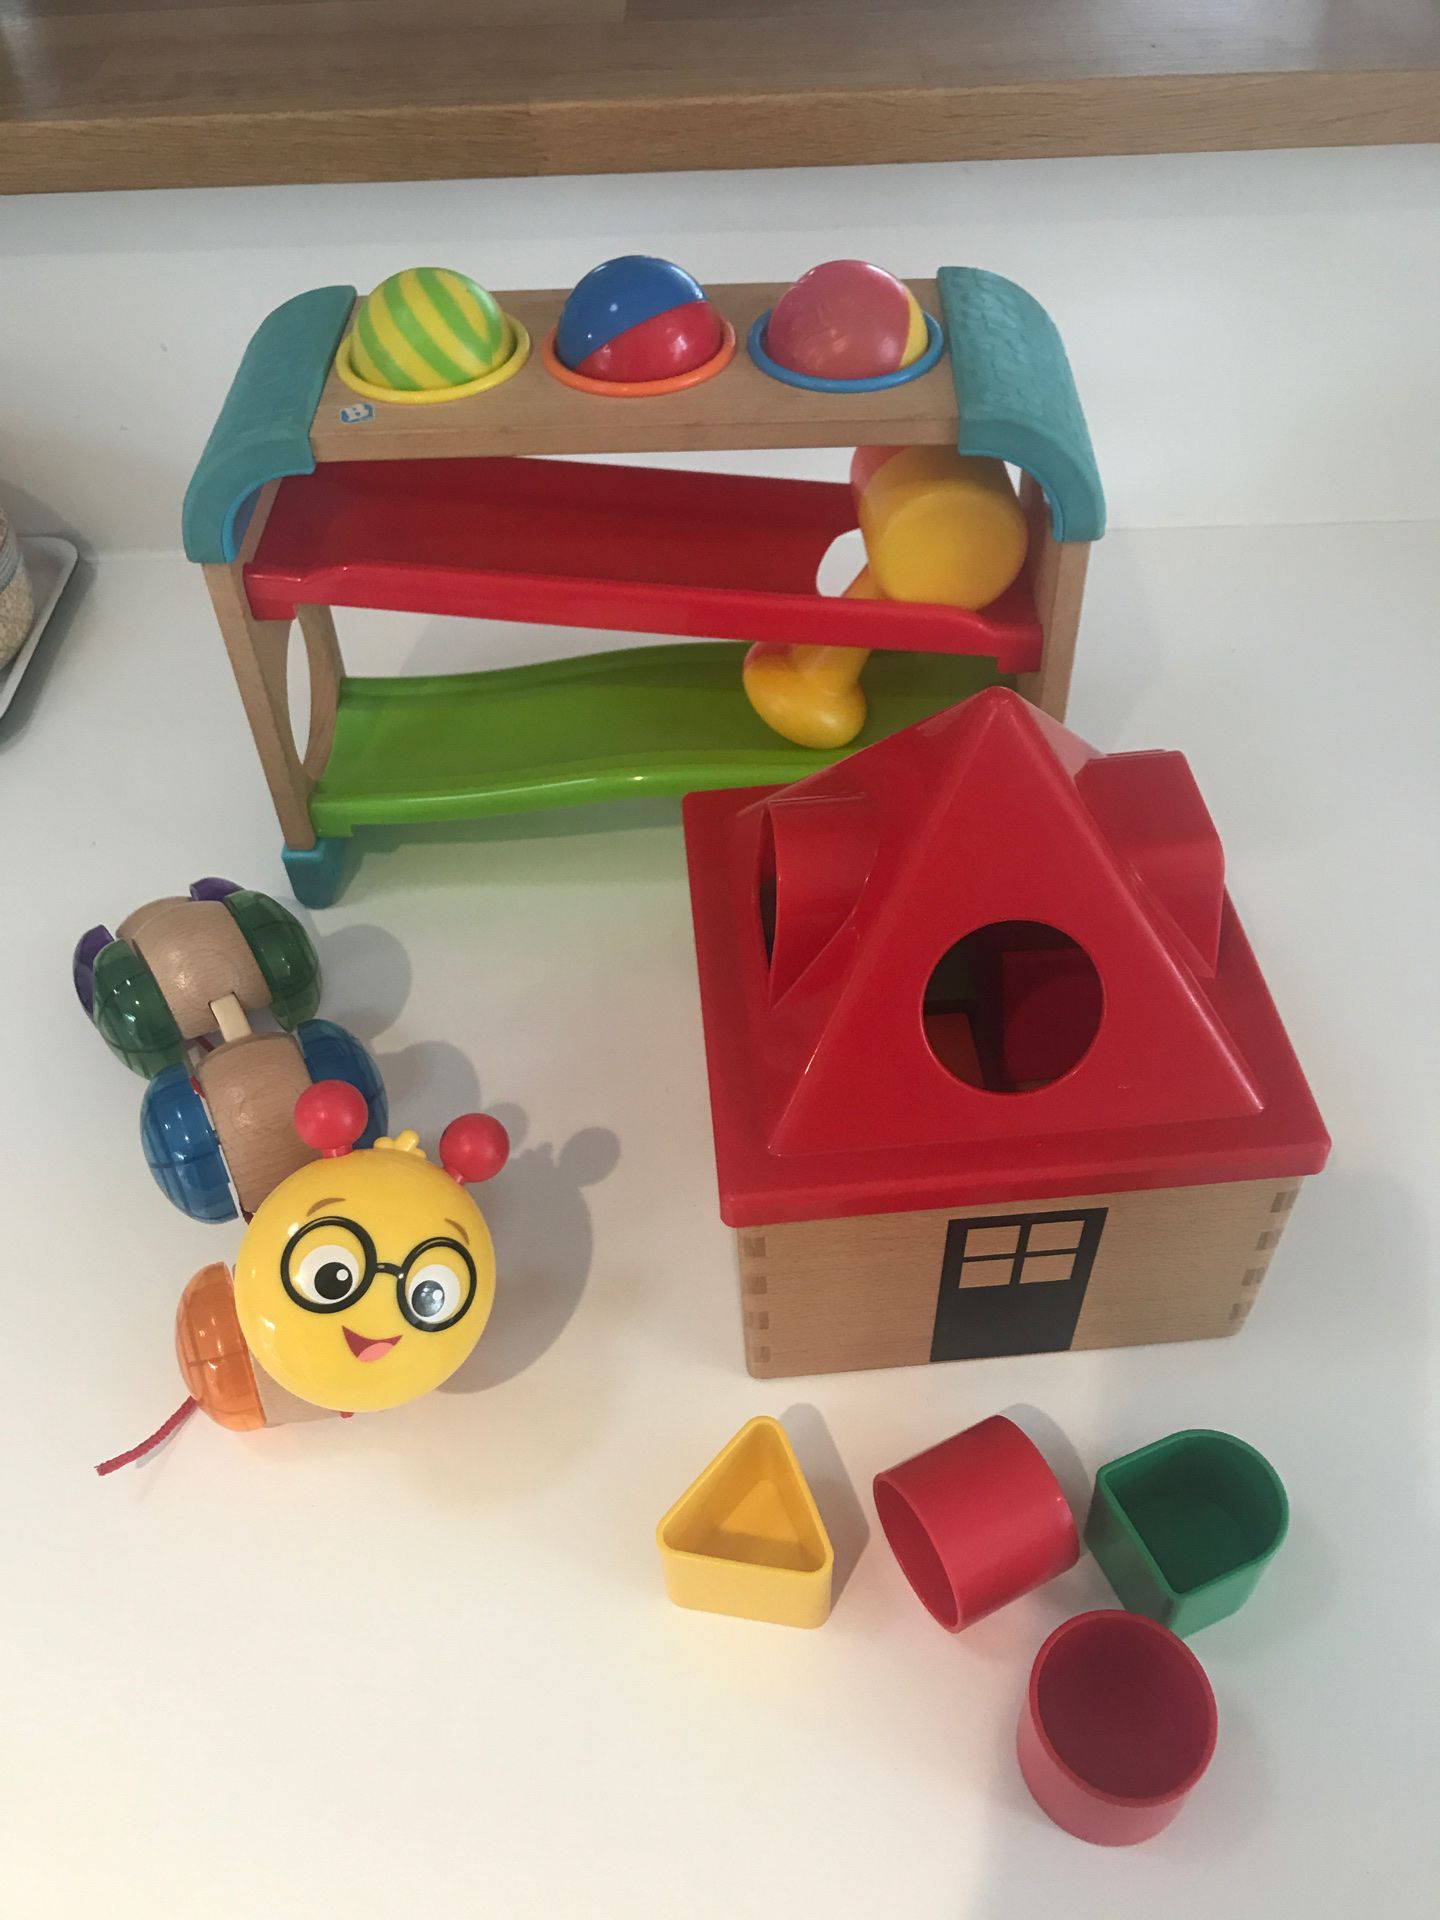 Baby wooden toys-Hape caterpillar, IKEA house shape, B kids pound & roll- $4 each